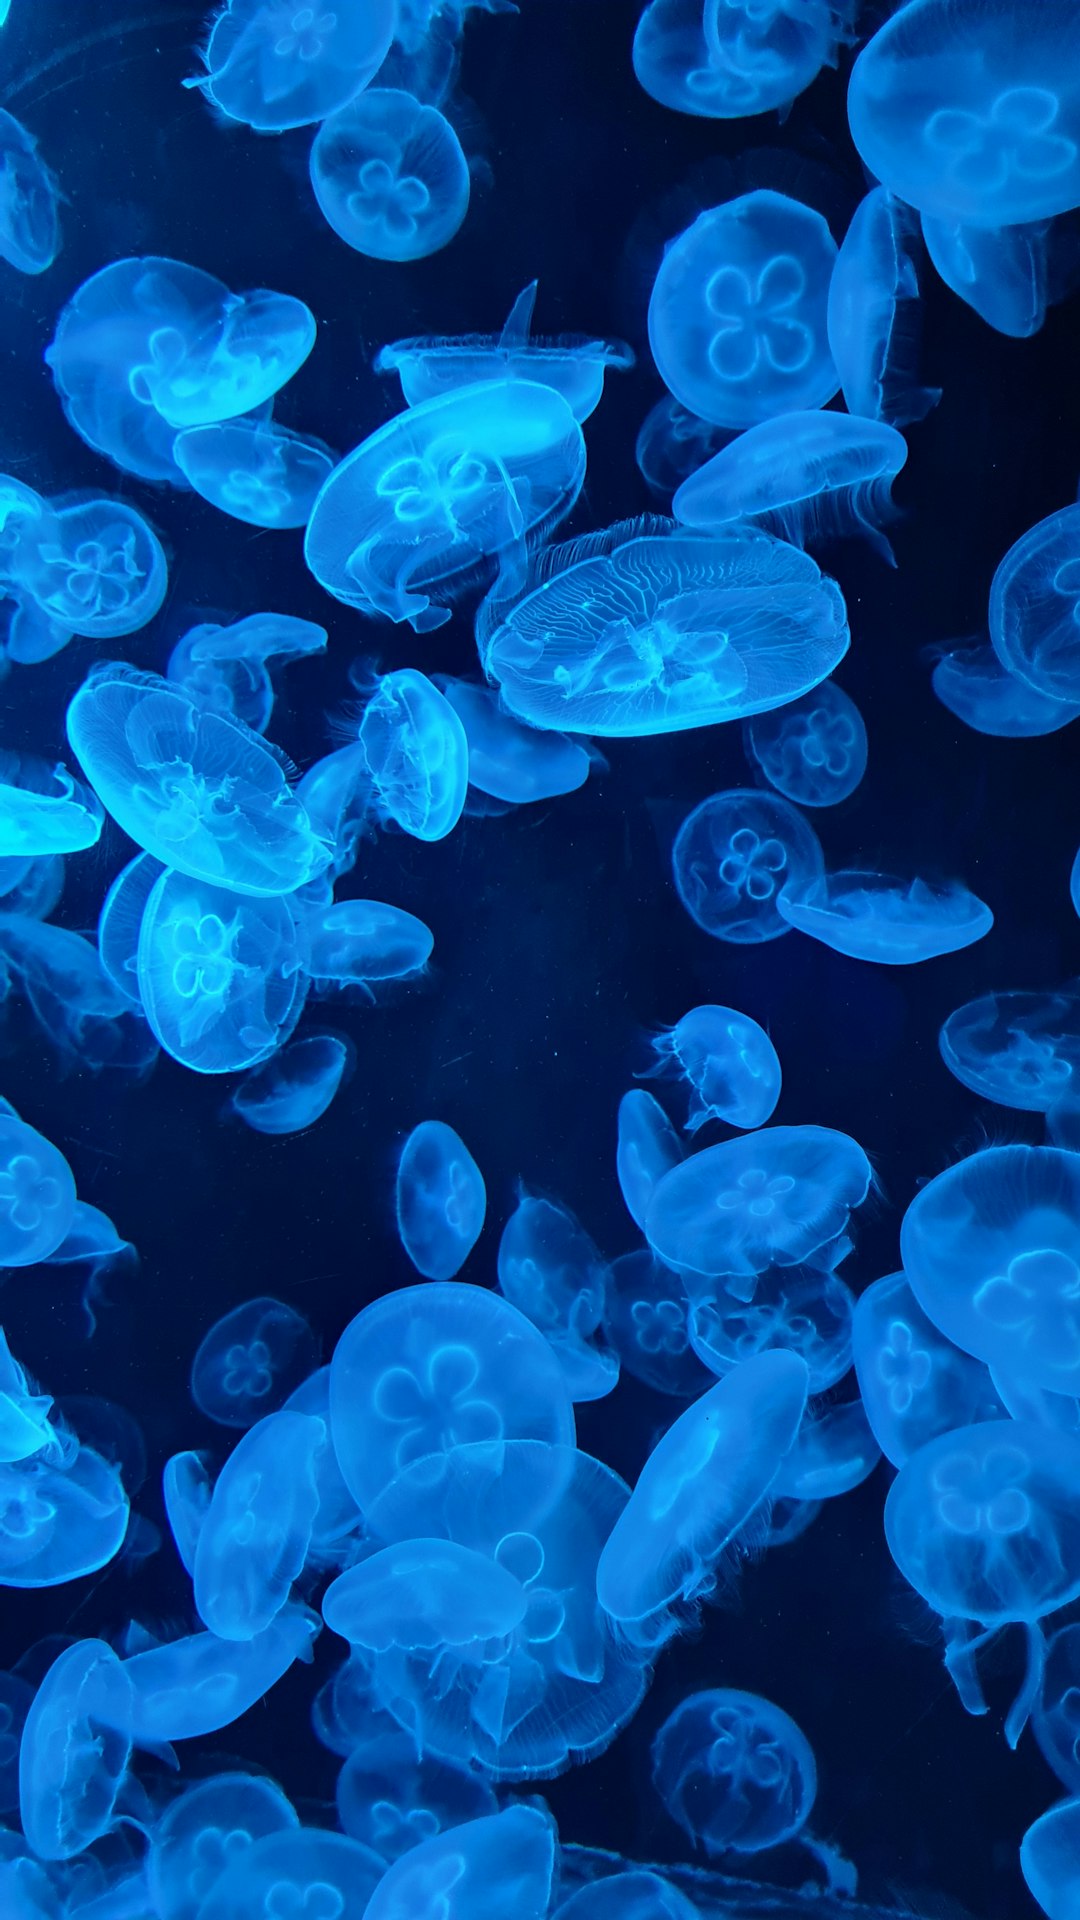  blue jellyfish in water during daytime jellyfish